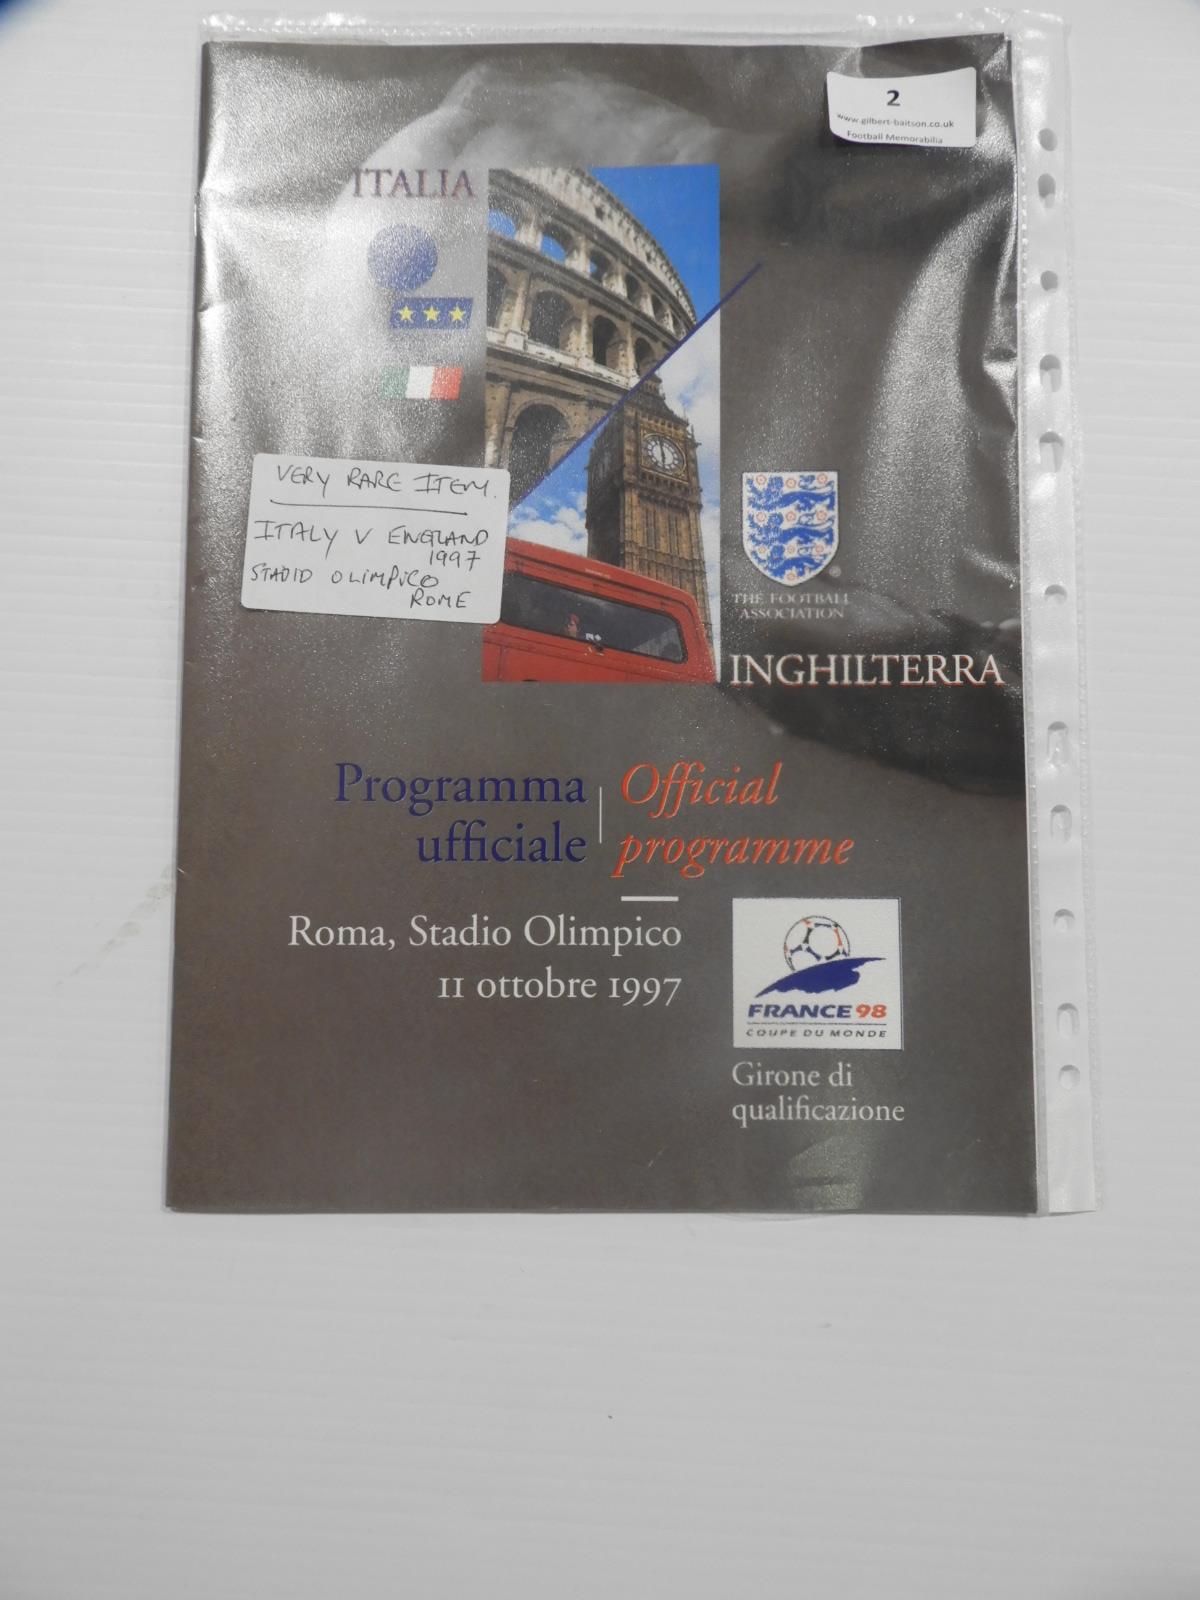 Italy vs England - Rome 1997 (Very Rare Item)